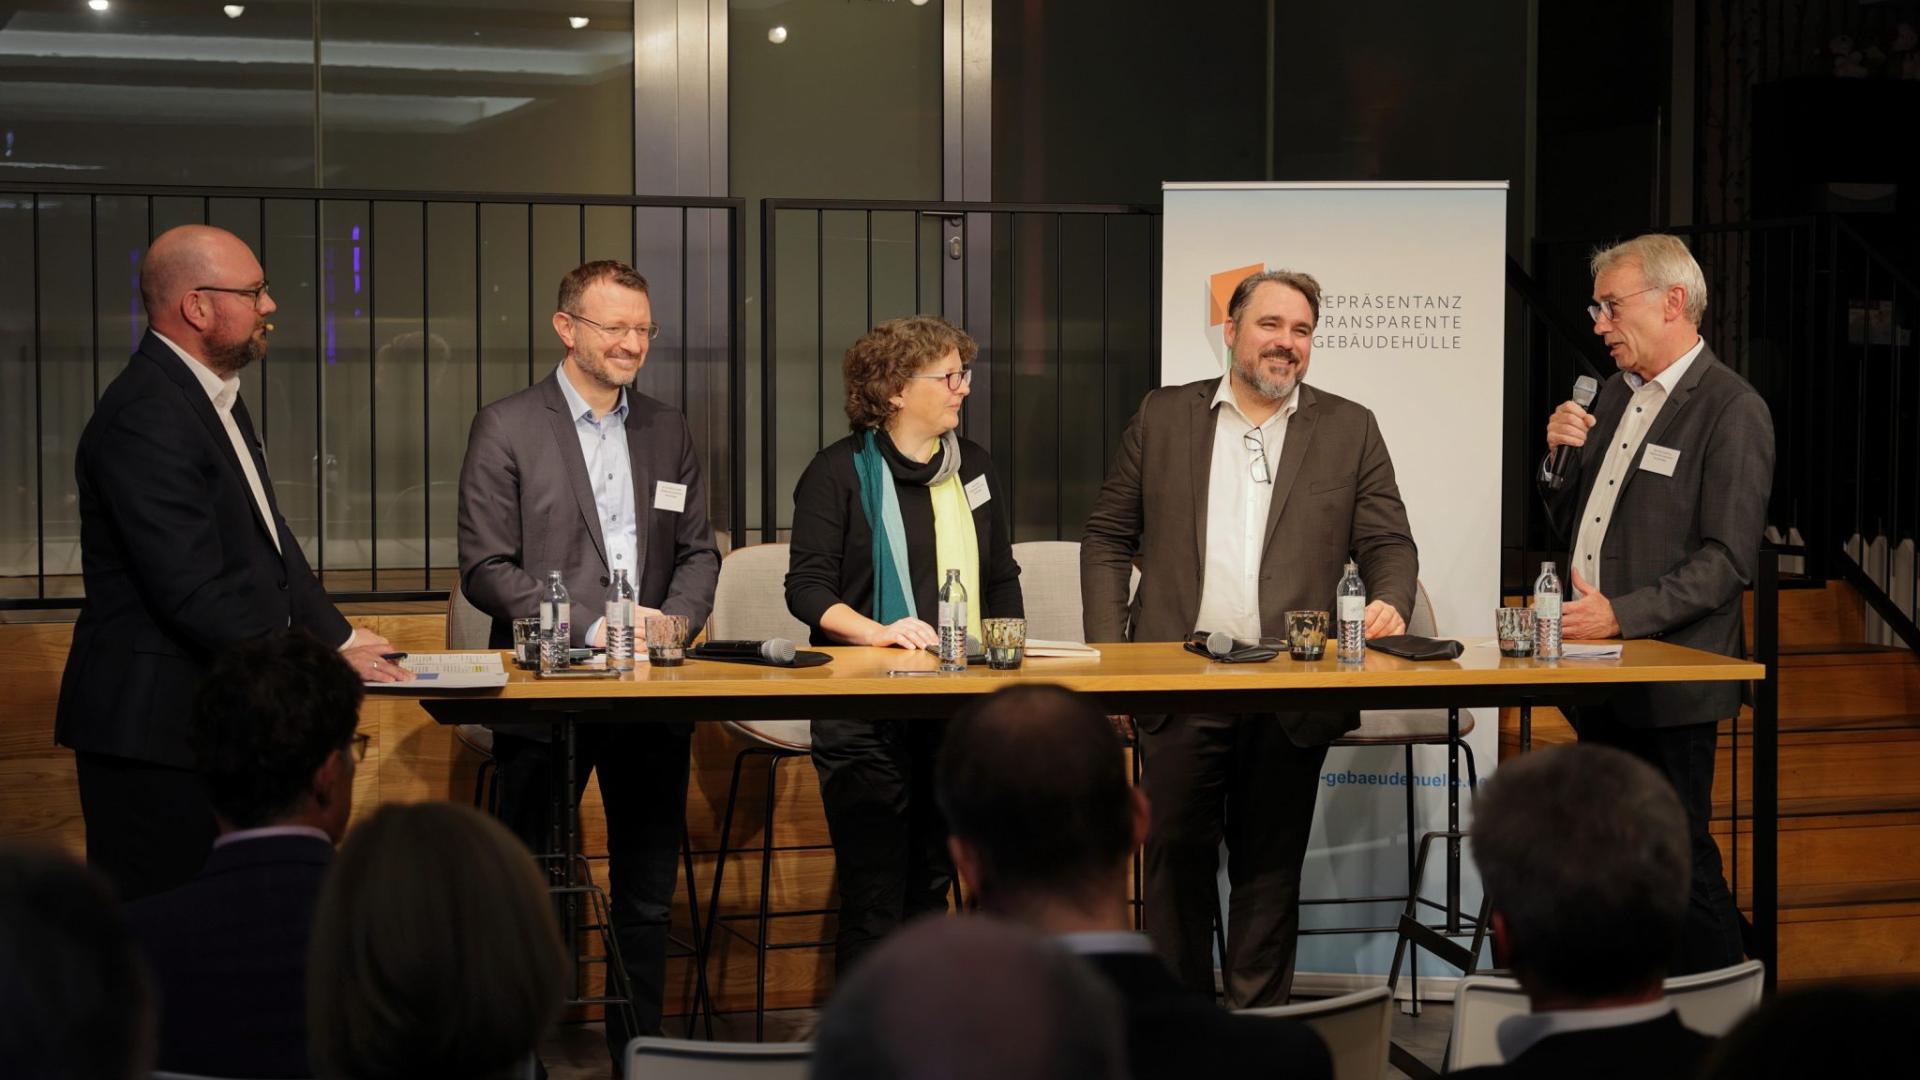 Parlamentarischer Abend in Präsenz mit den Baupolitikern/-innen Anja Liebert (Bündnis90/Die Grünen), Bernhard Daldrup (SPD), Dr. Jan-Marco Luczak (CDU/CSU) und Daniel Föst (FDP)